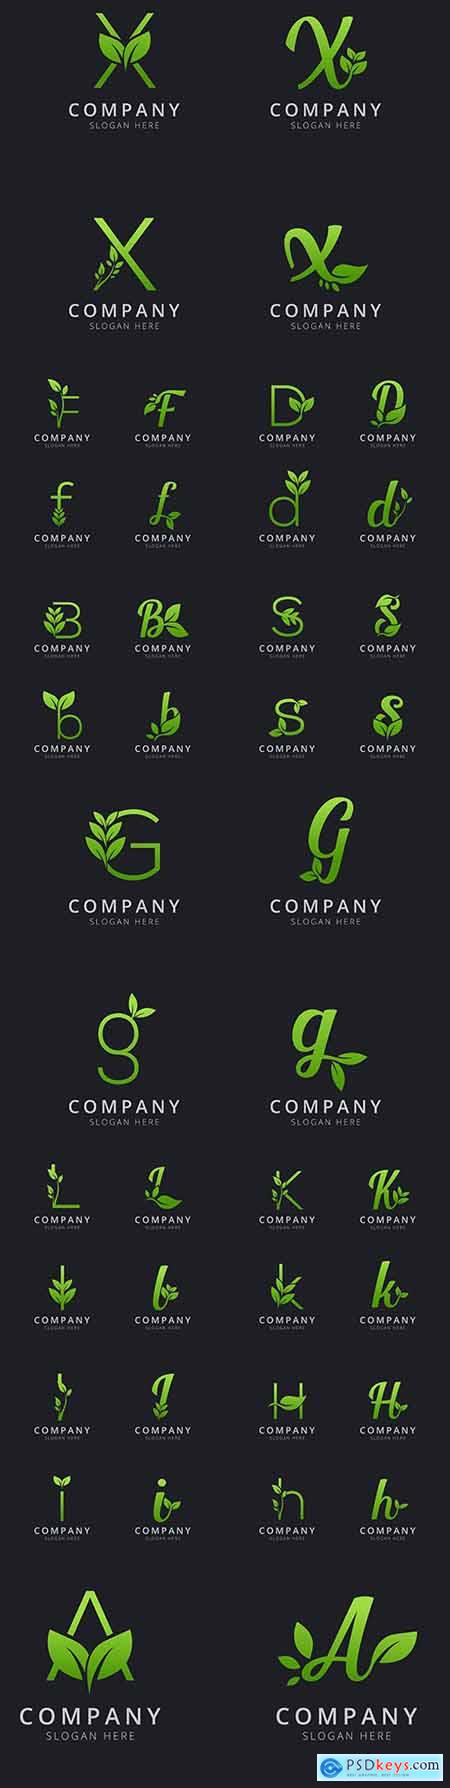 Brand name company logos business corporate design 39